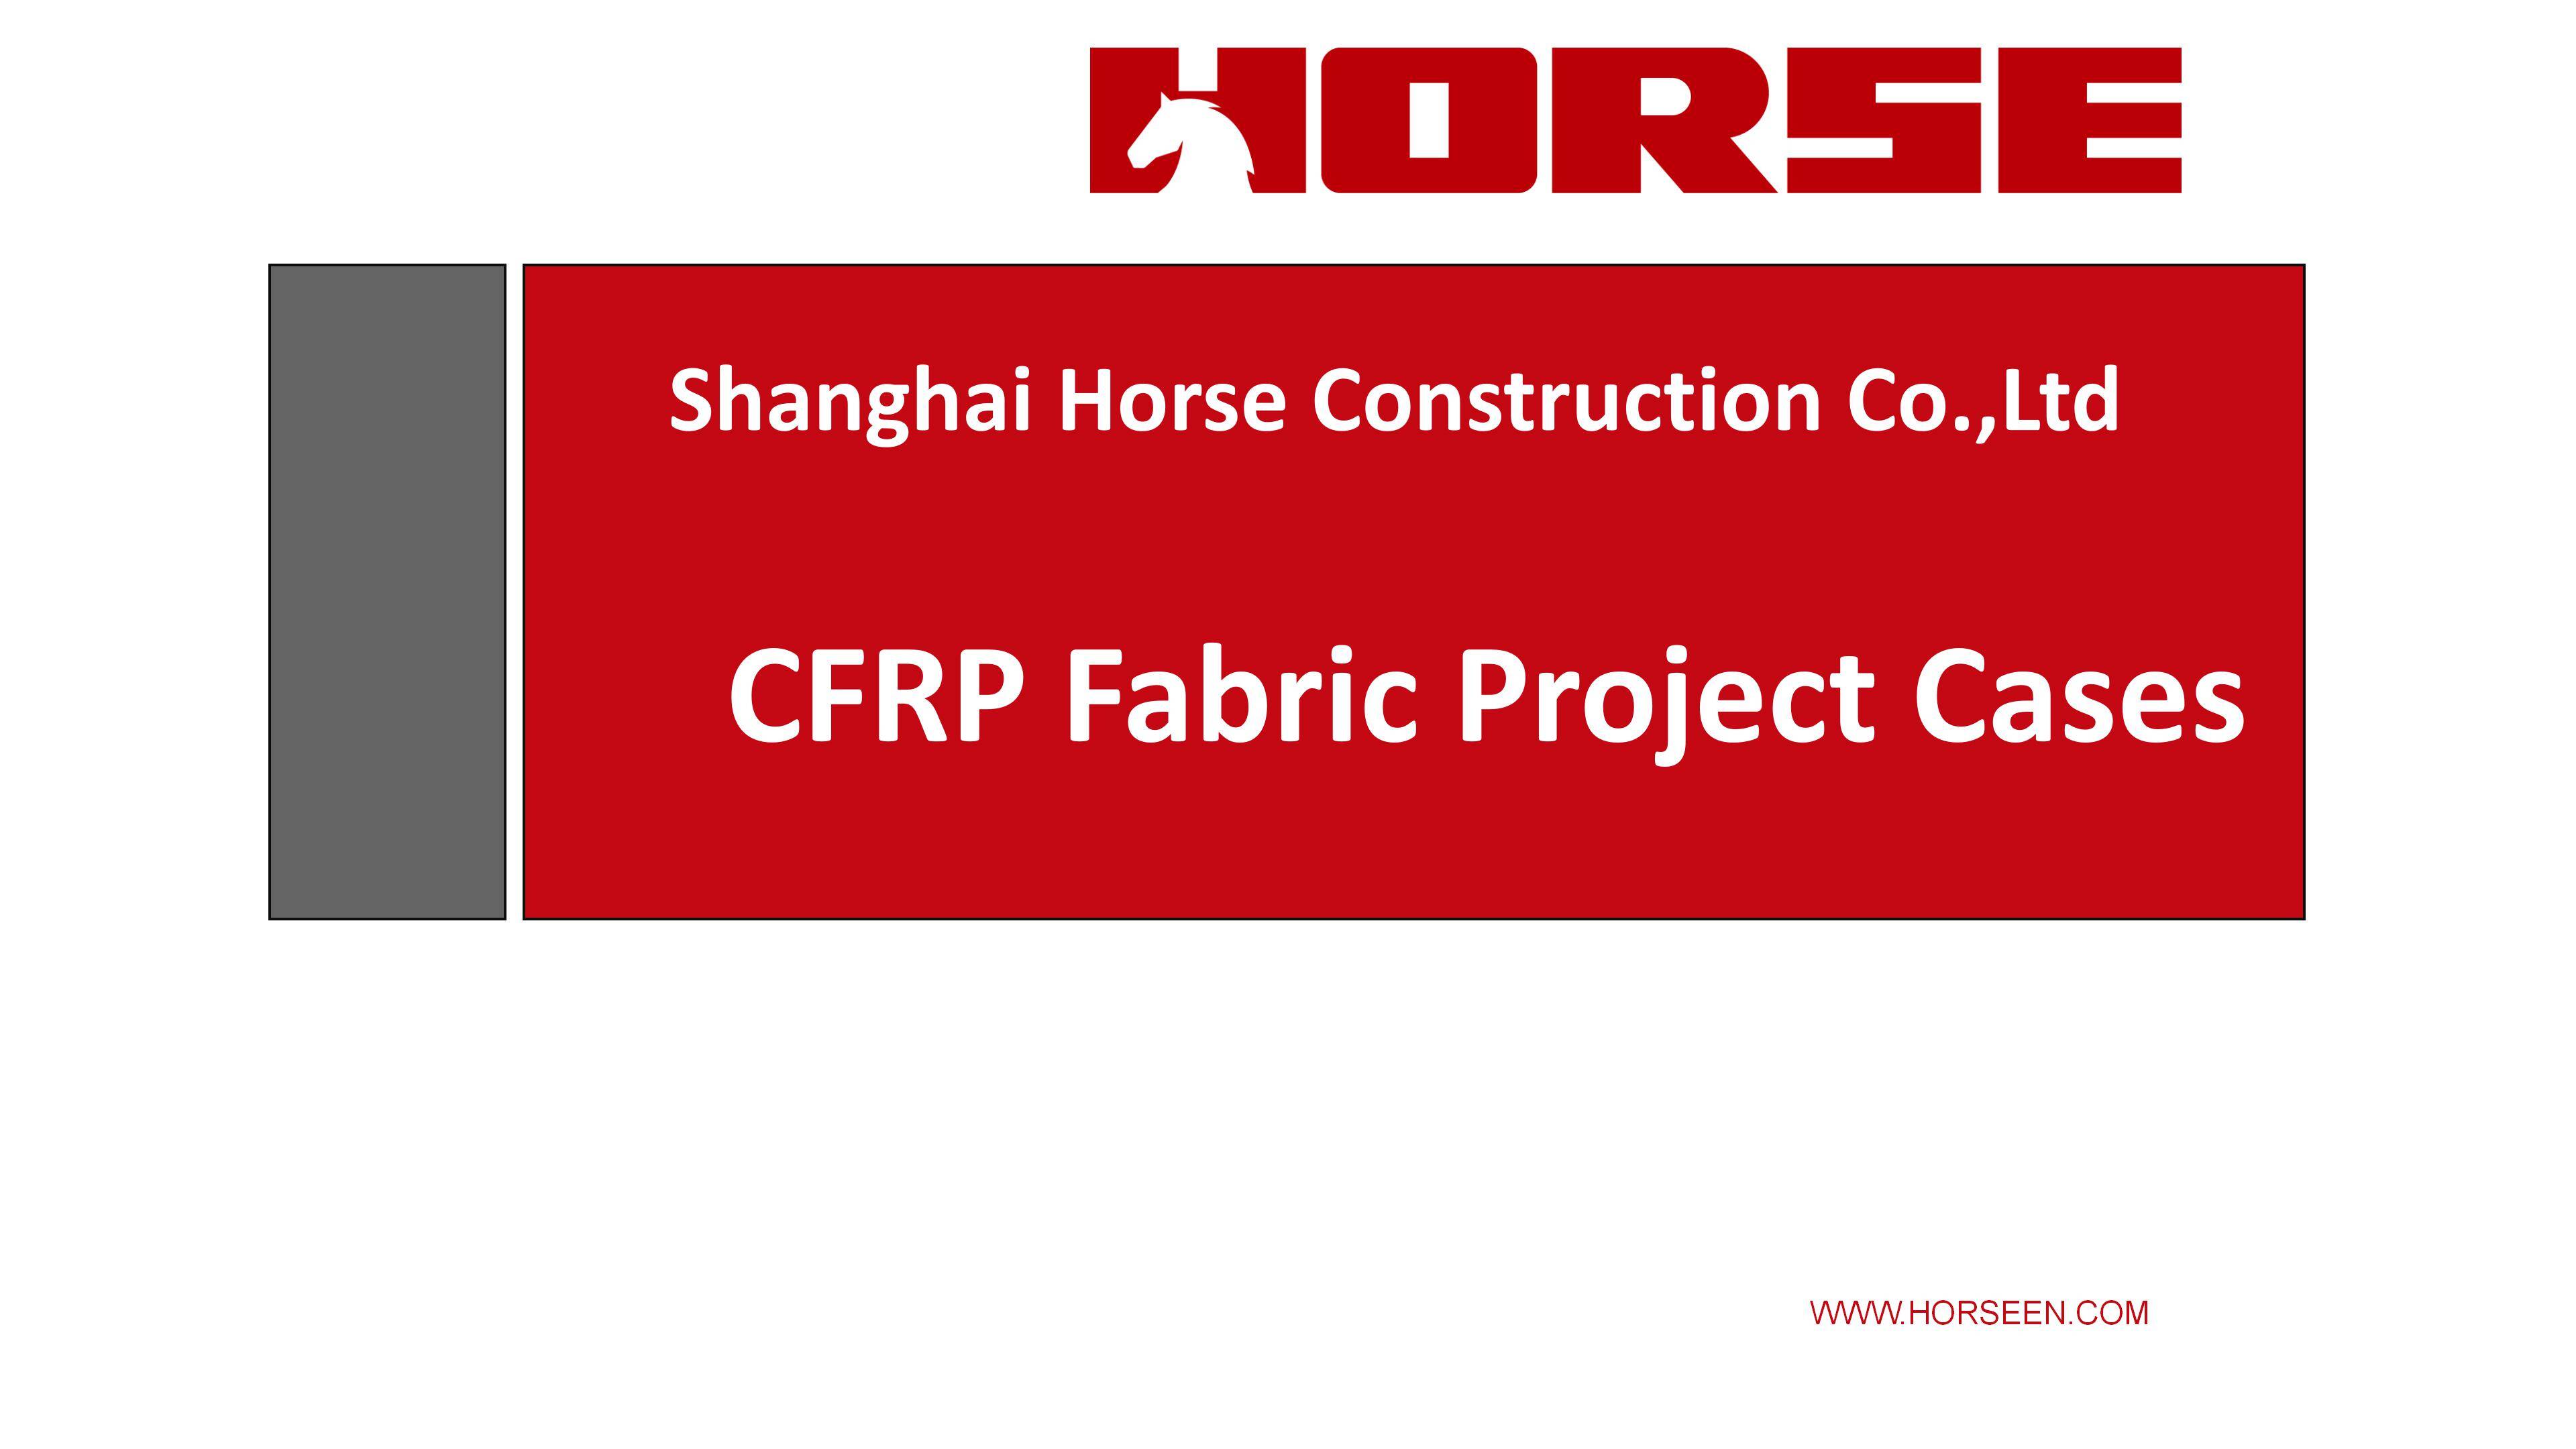 CFRP Fabric Project